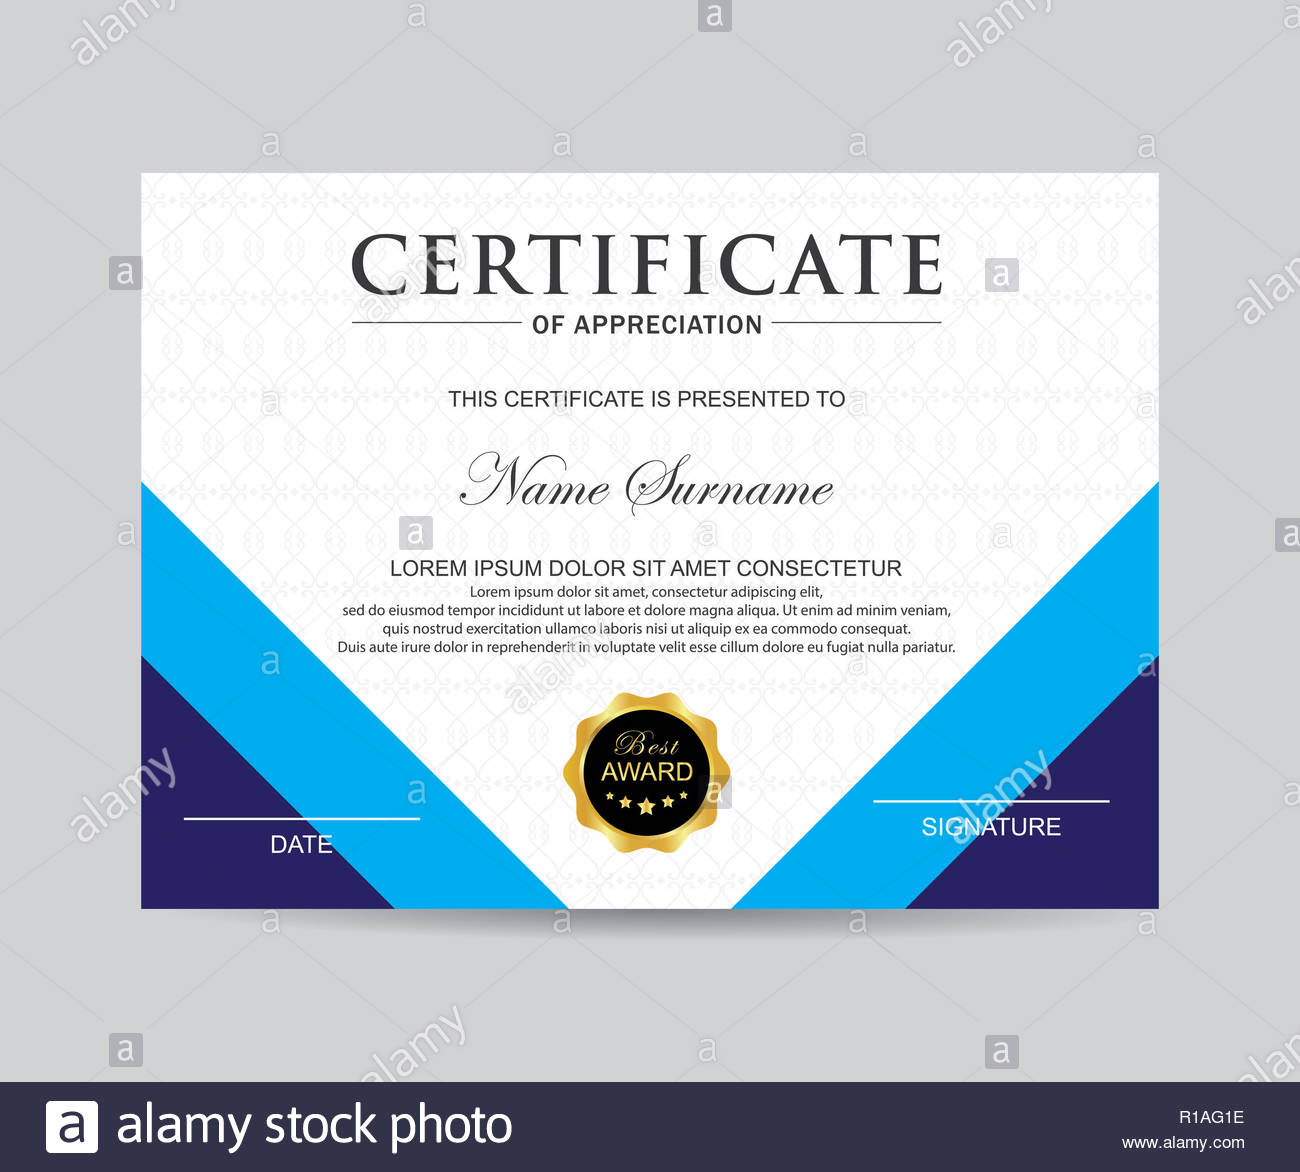 Modern Certificate Template And Background Stock Photo Regarding Borderless Certificate Templates